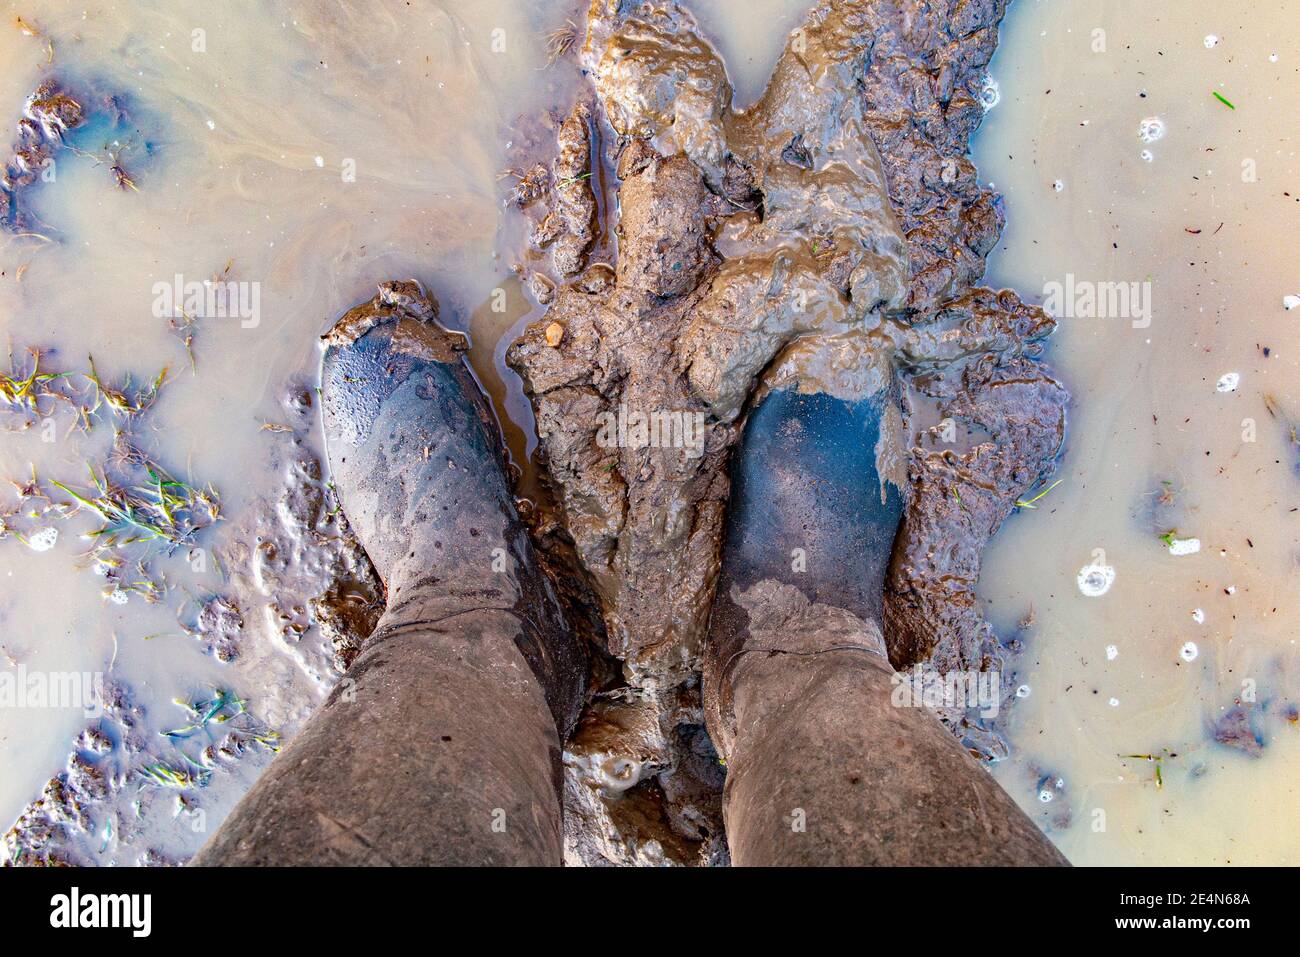 Wellington boots in deep, wet mud Stock Photo